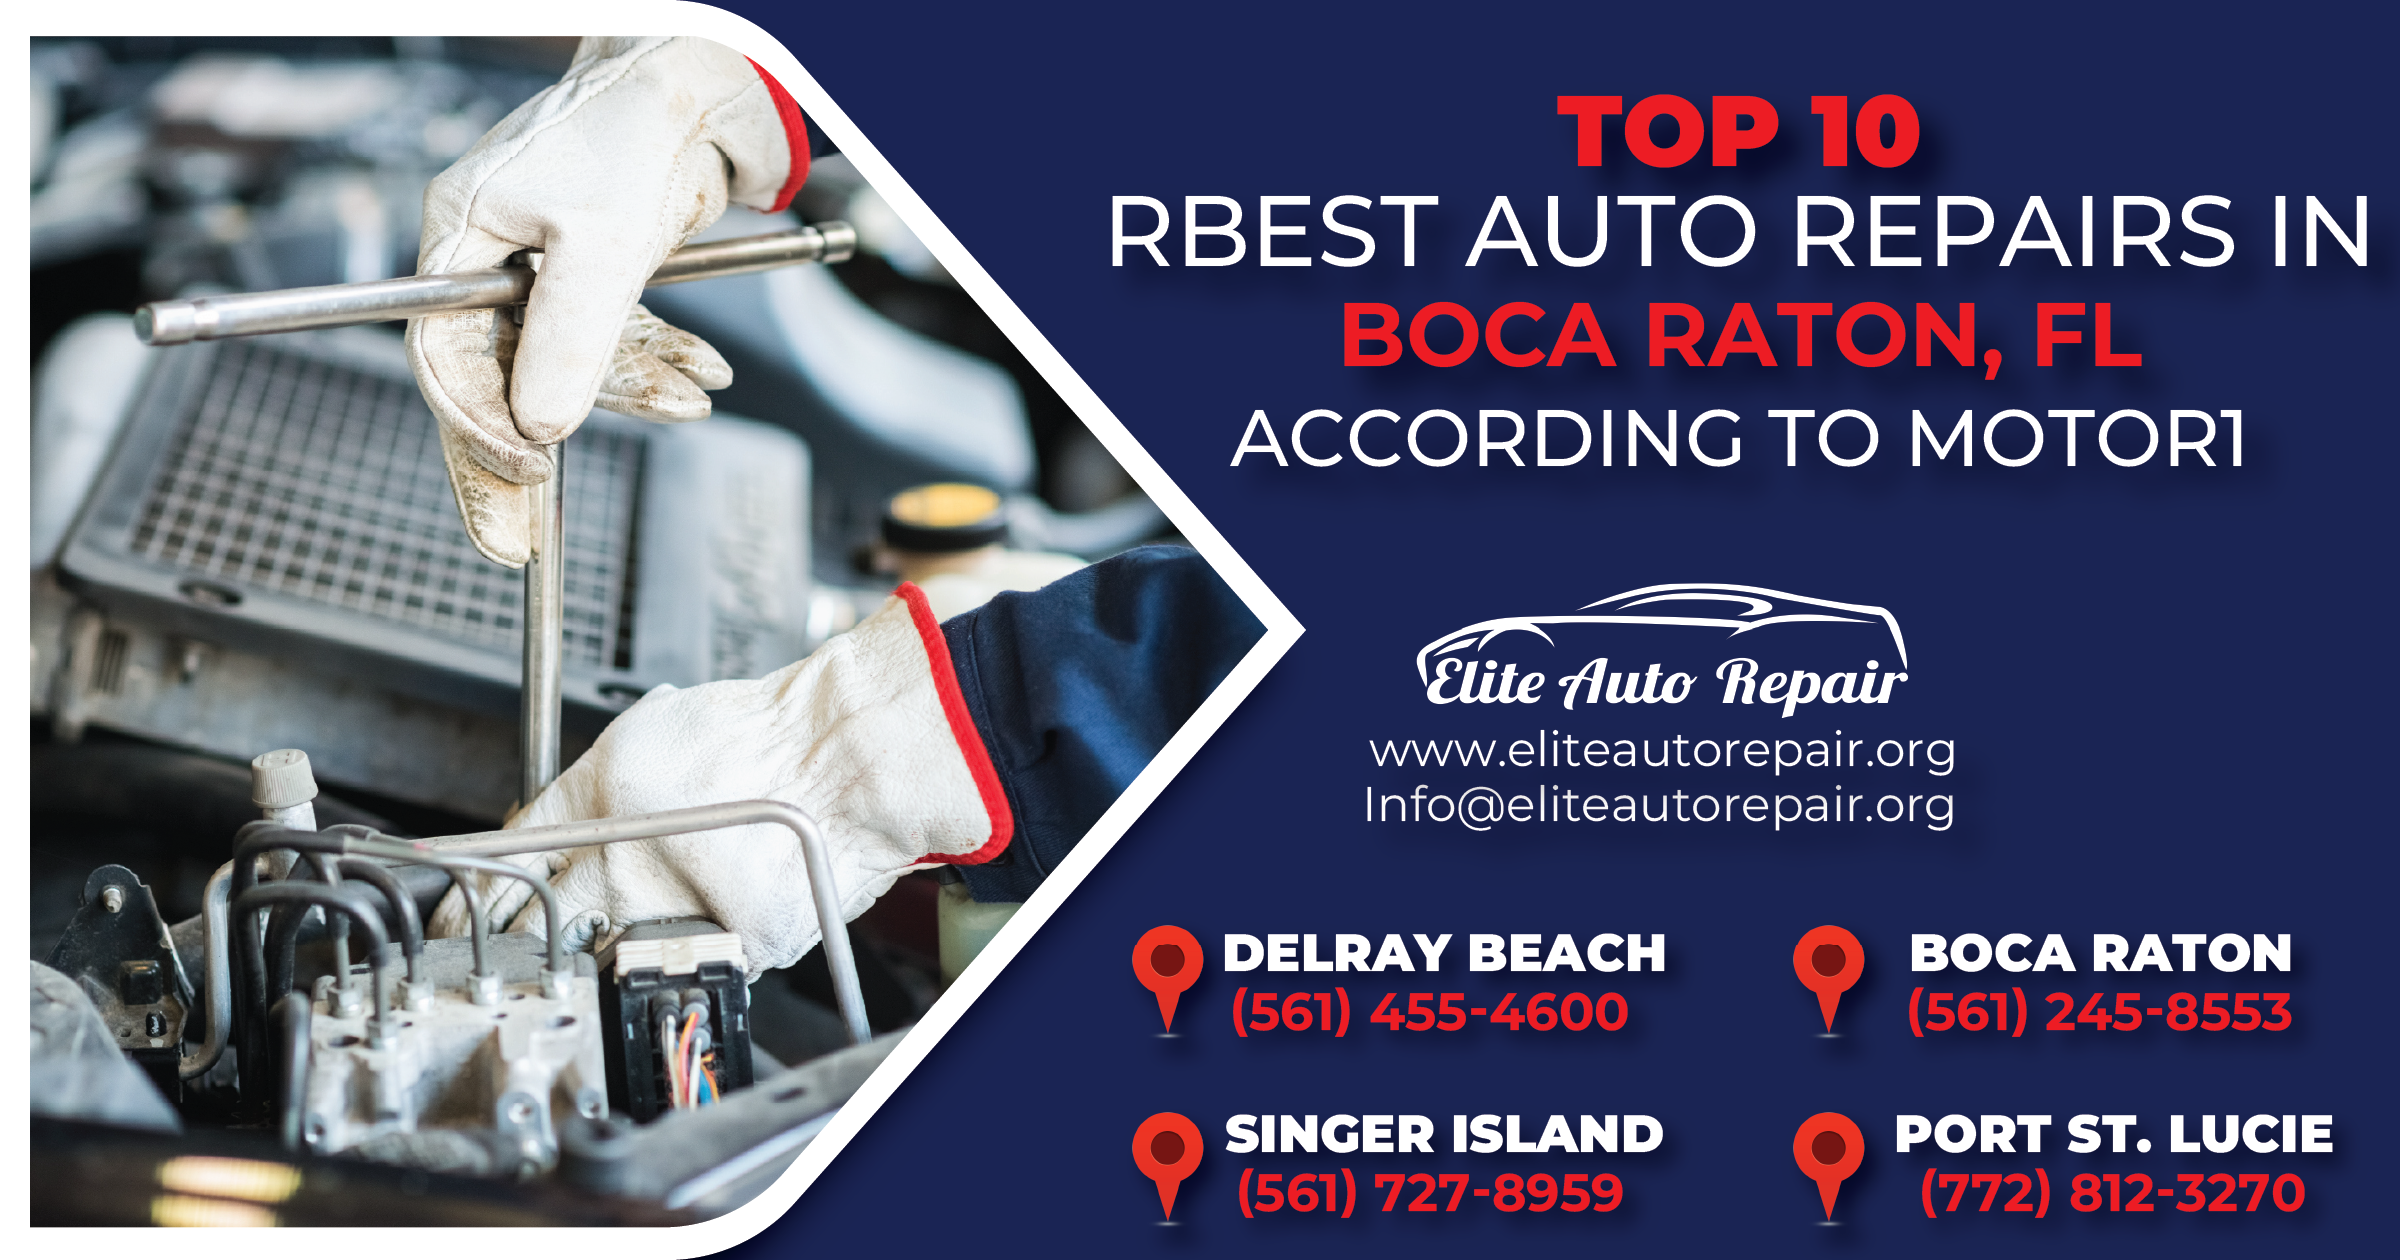 Top 10 Best Auto Repairs in Boca Raton Florida – According to Motor1